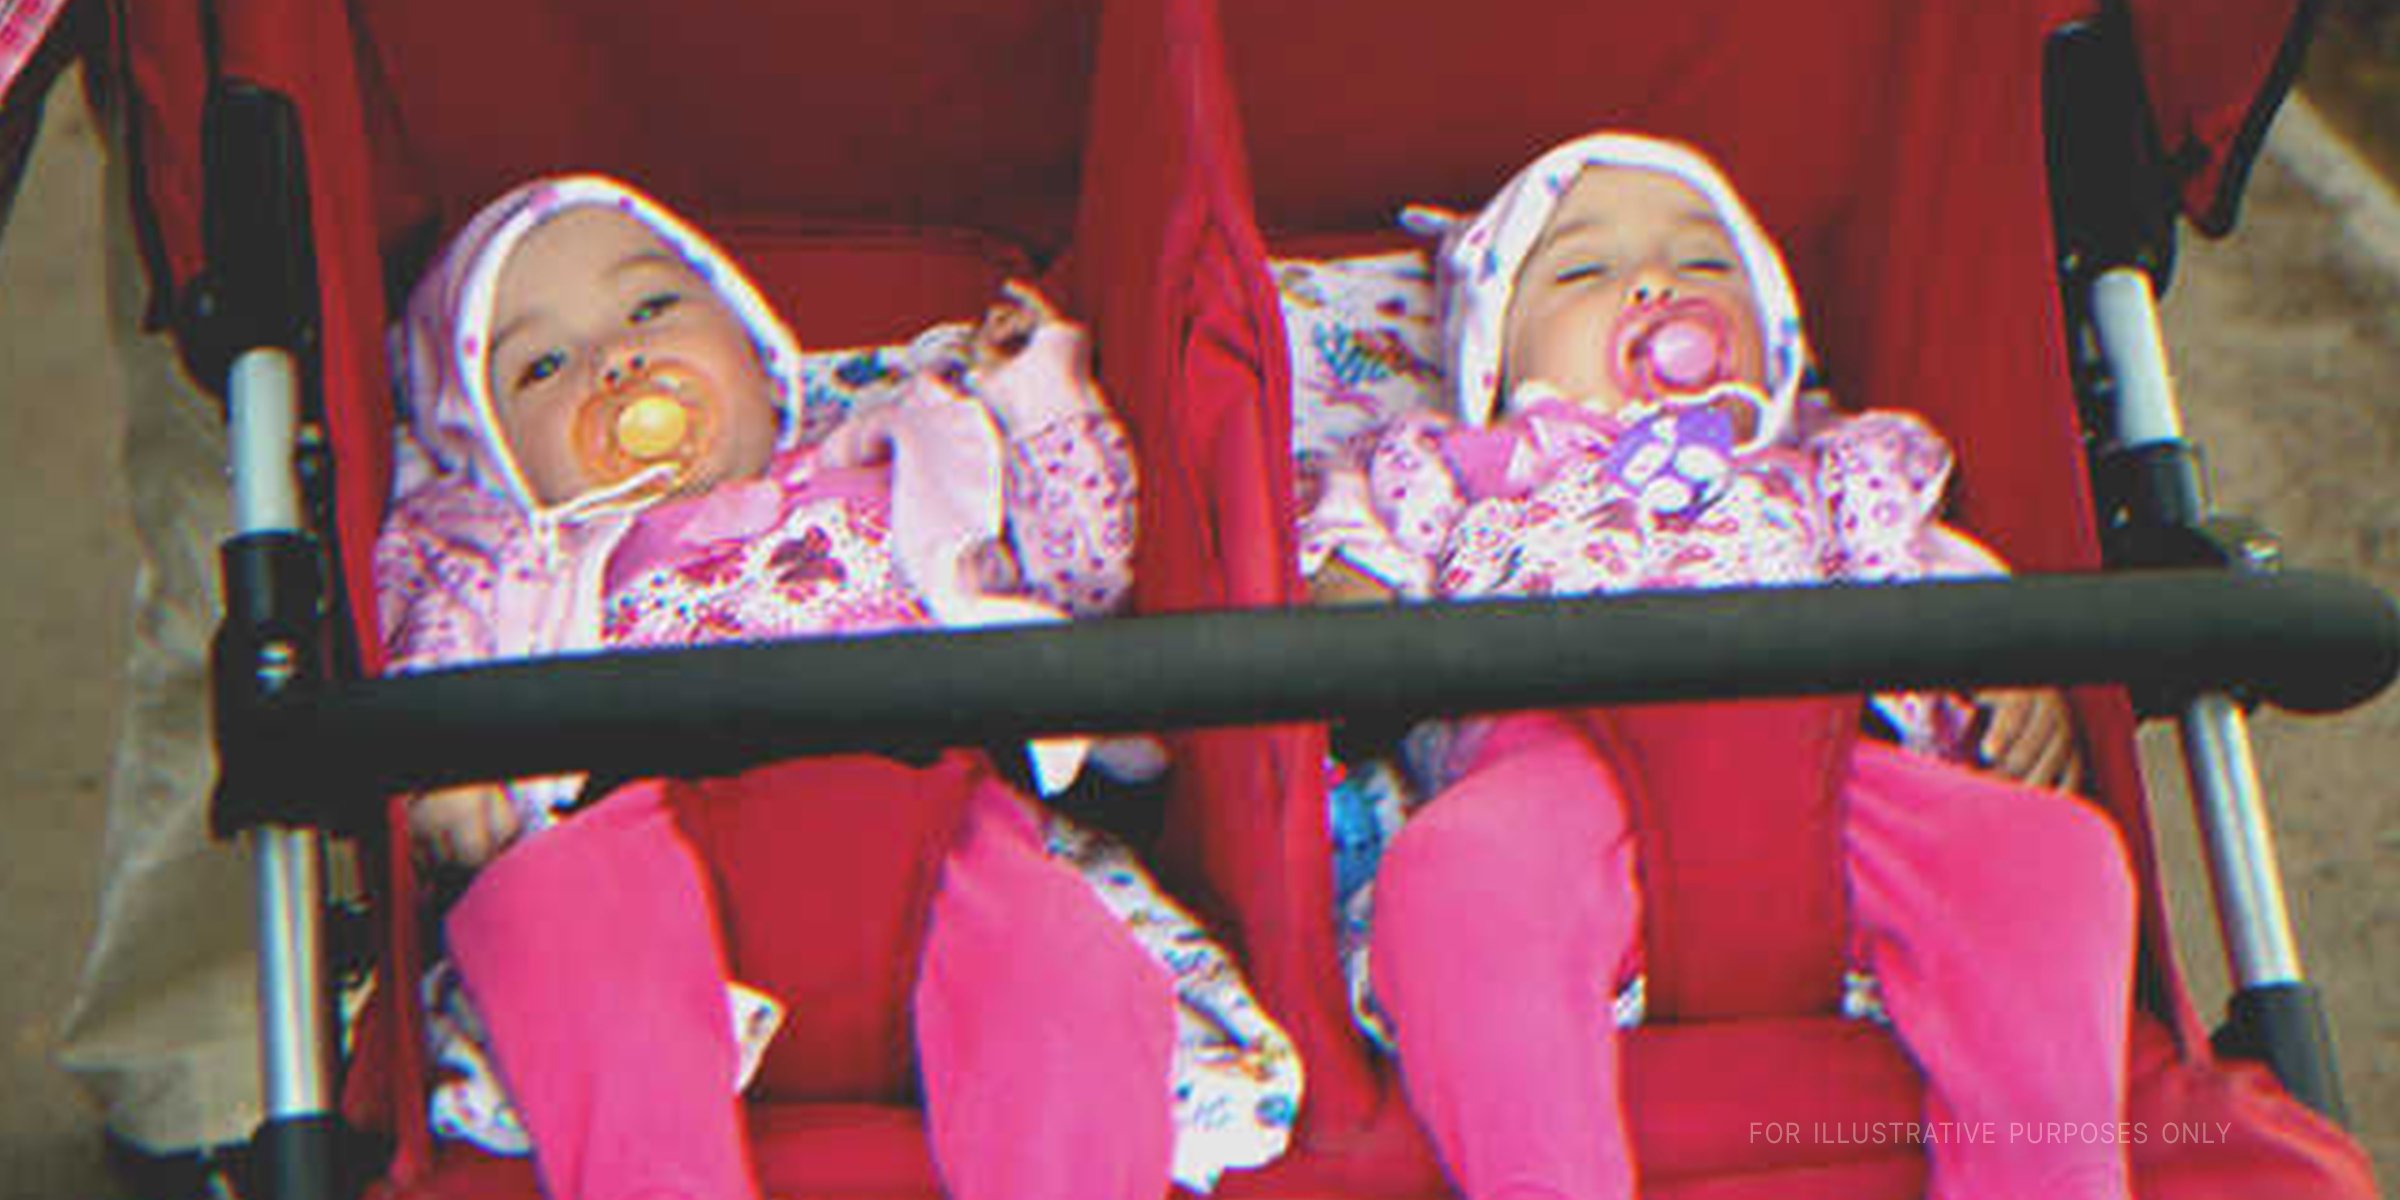 Twins Resting In A Stroller. | Source: Shutterstock